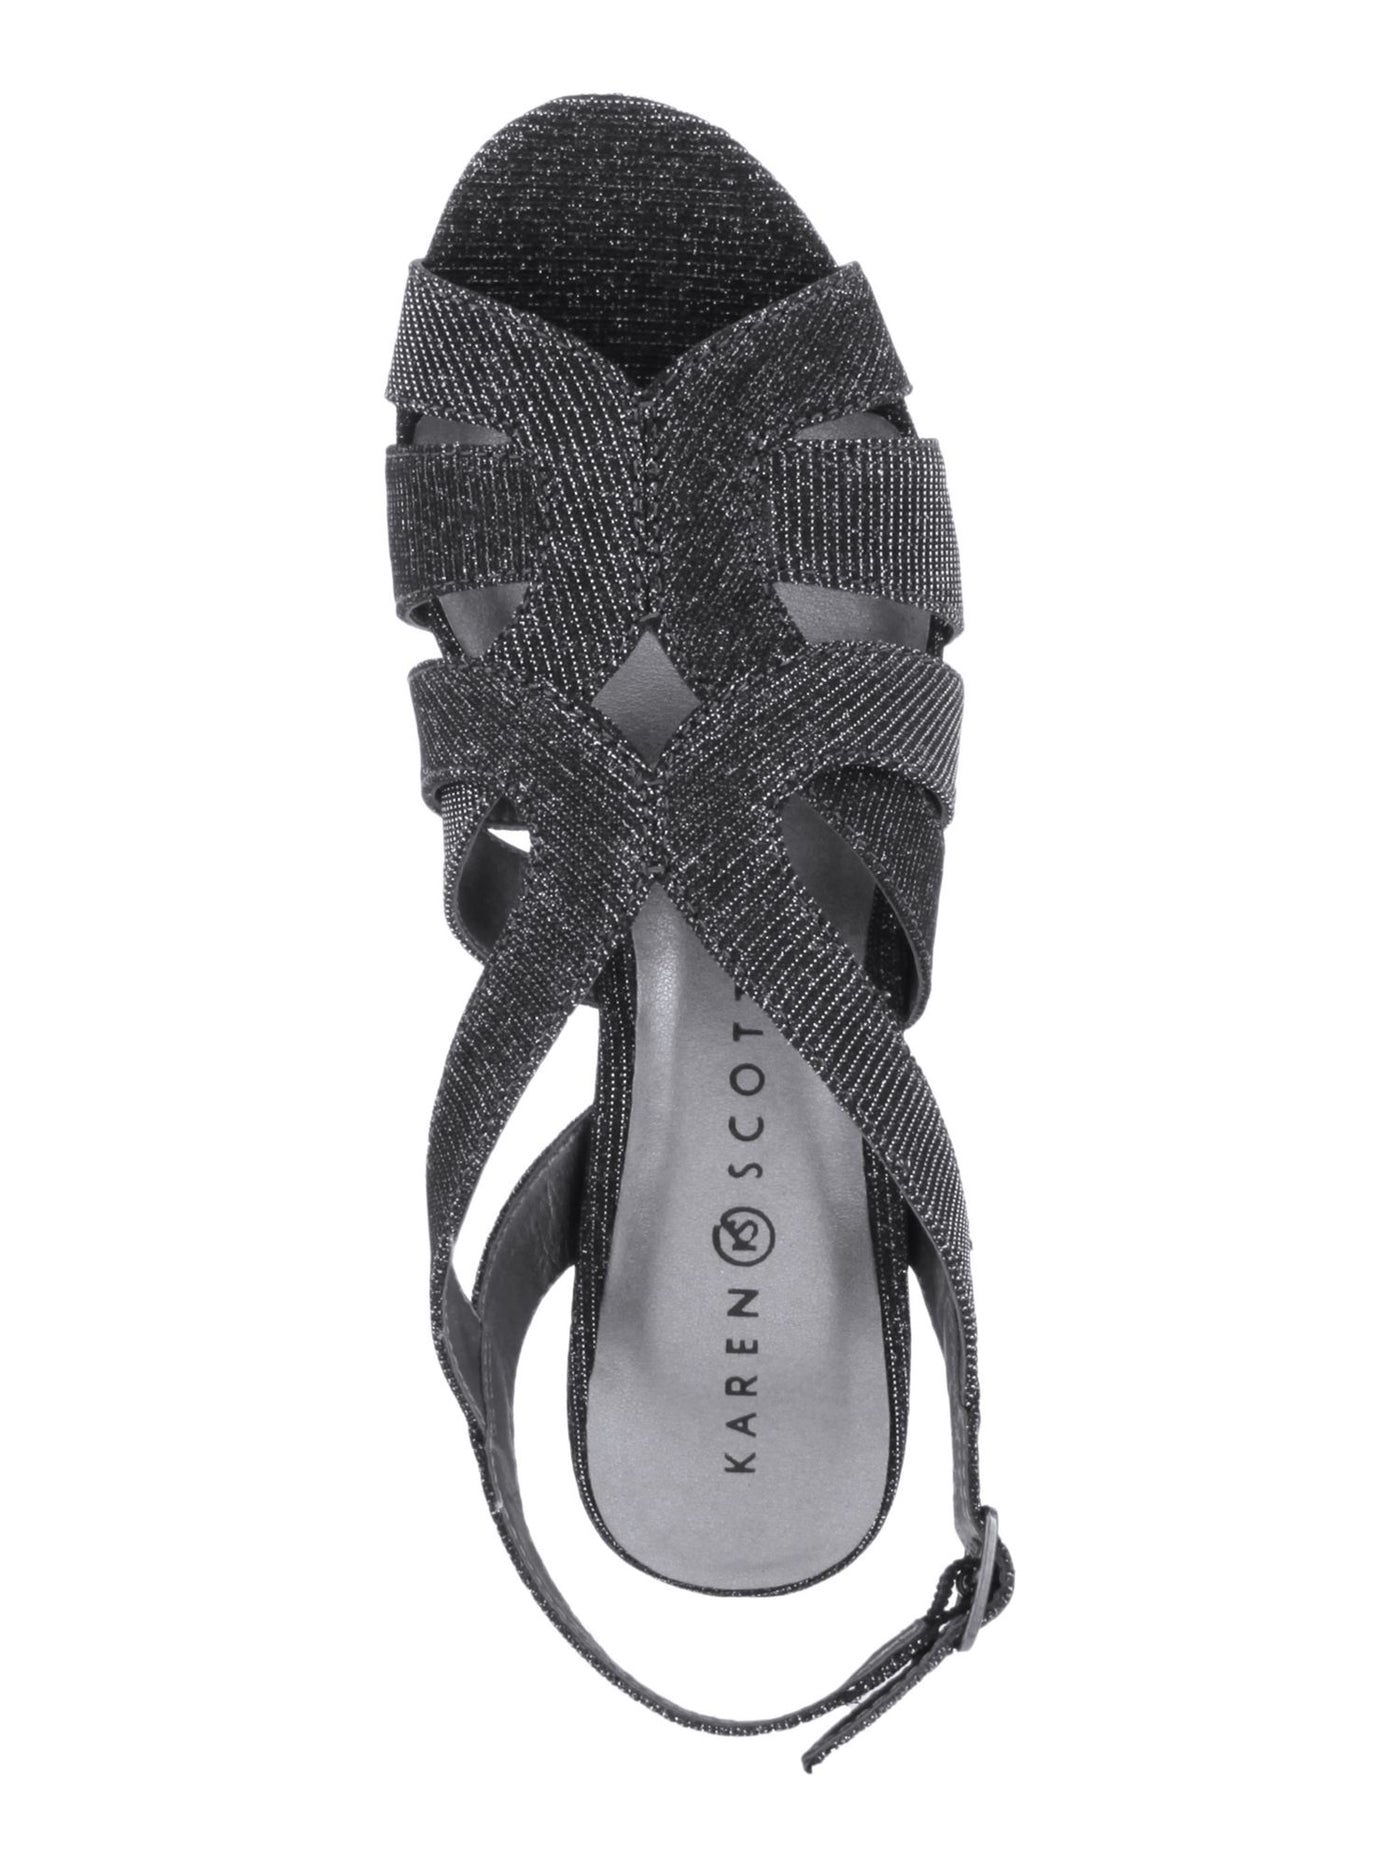 KAREN SCOTT Womens Gray Glitter Cushioned Belindah Peep Toe Stiletto Buckle Dress Sandals Shoes 7 M